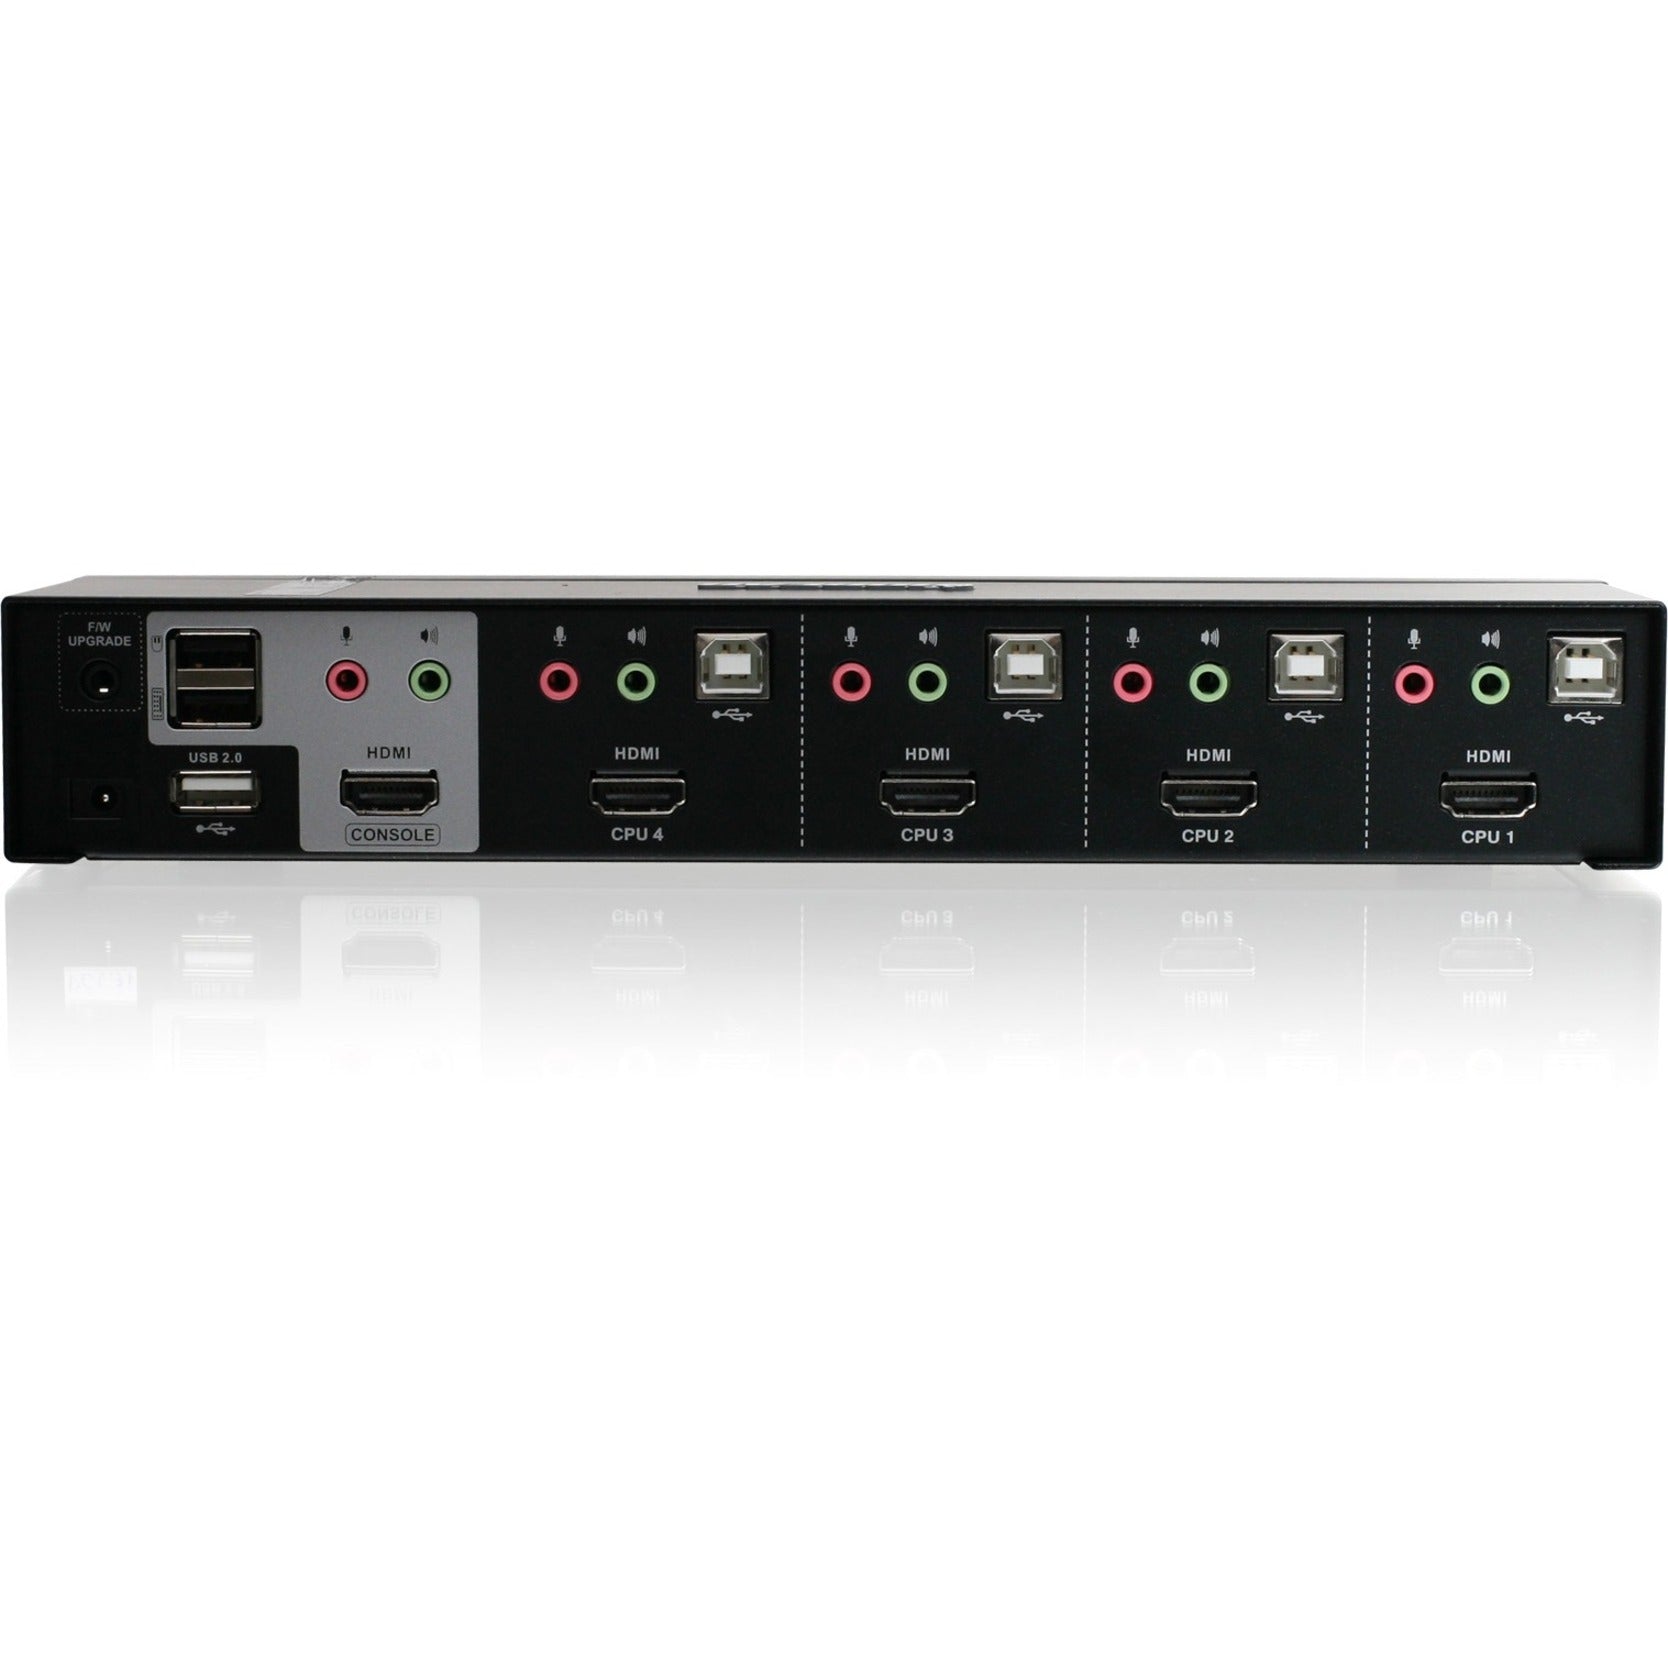 IOGEAR GCS1794 MiniView 4-Port HDMI Multimedia KVM Switch with Audio, 3840 x 2160 Resolution, 3 Year Warranty